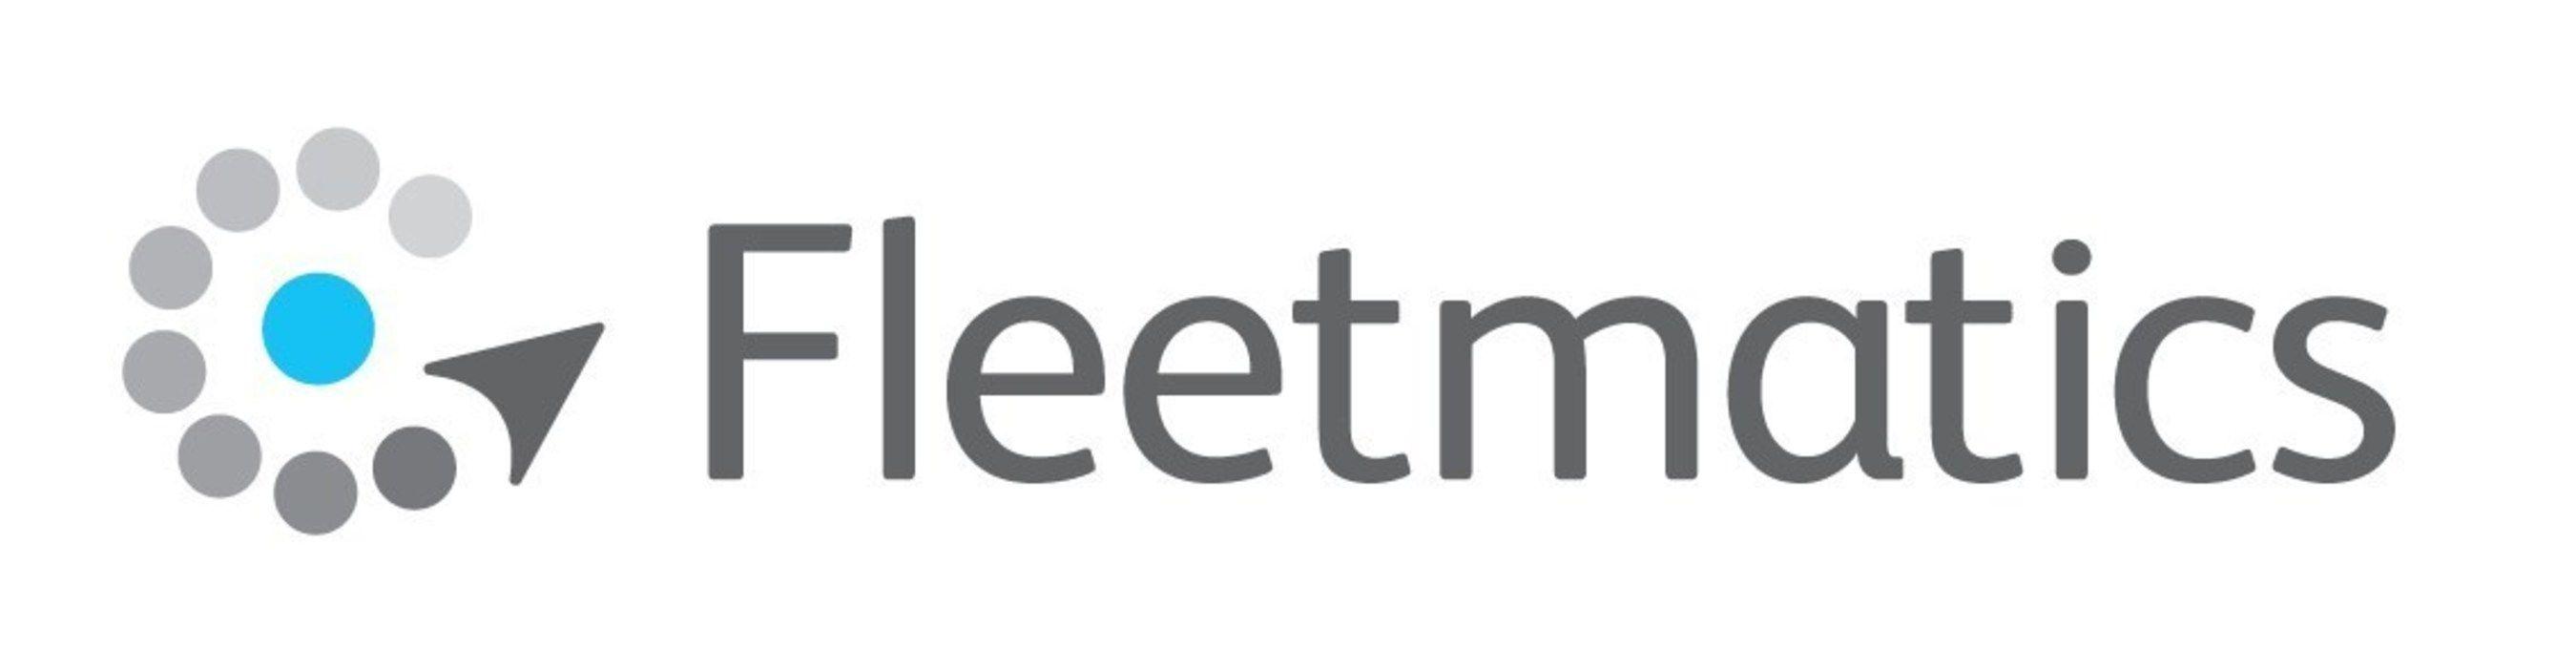 American Technology Company Logo - Fleetmatics Ranked Top Fleet Management Software Company in North ...